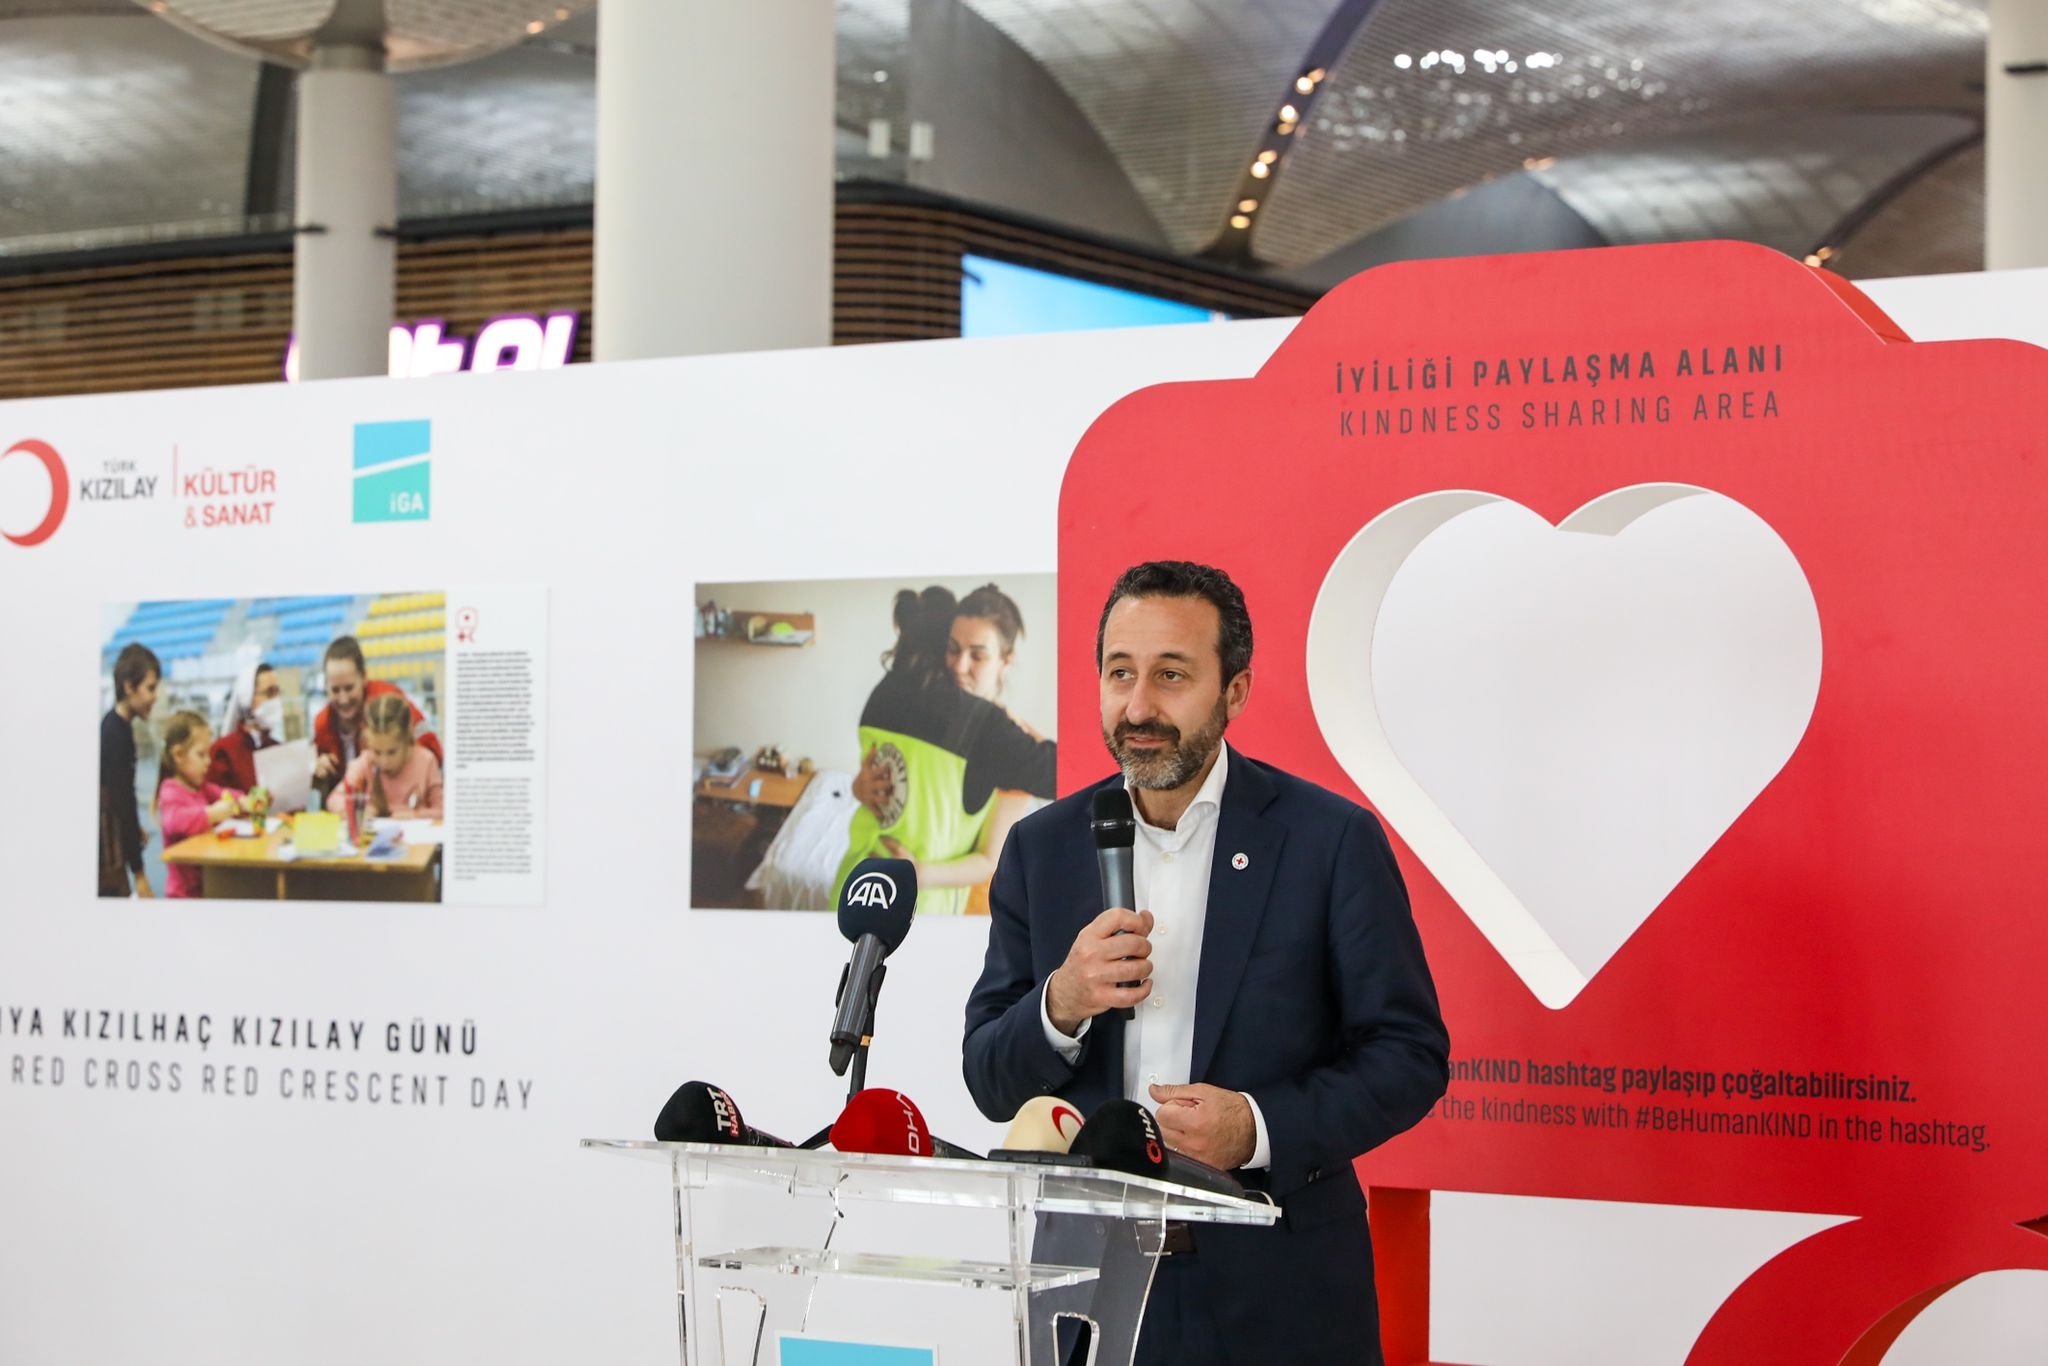 Direktur Jenderal Palang Merah Internasional Robert Mardini berbicara pada upacara pembukaan pameran “Meeting in Kindness”, Bandara Istanbul, Istanbul, Turki, 8 Mei 2022.